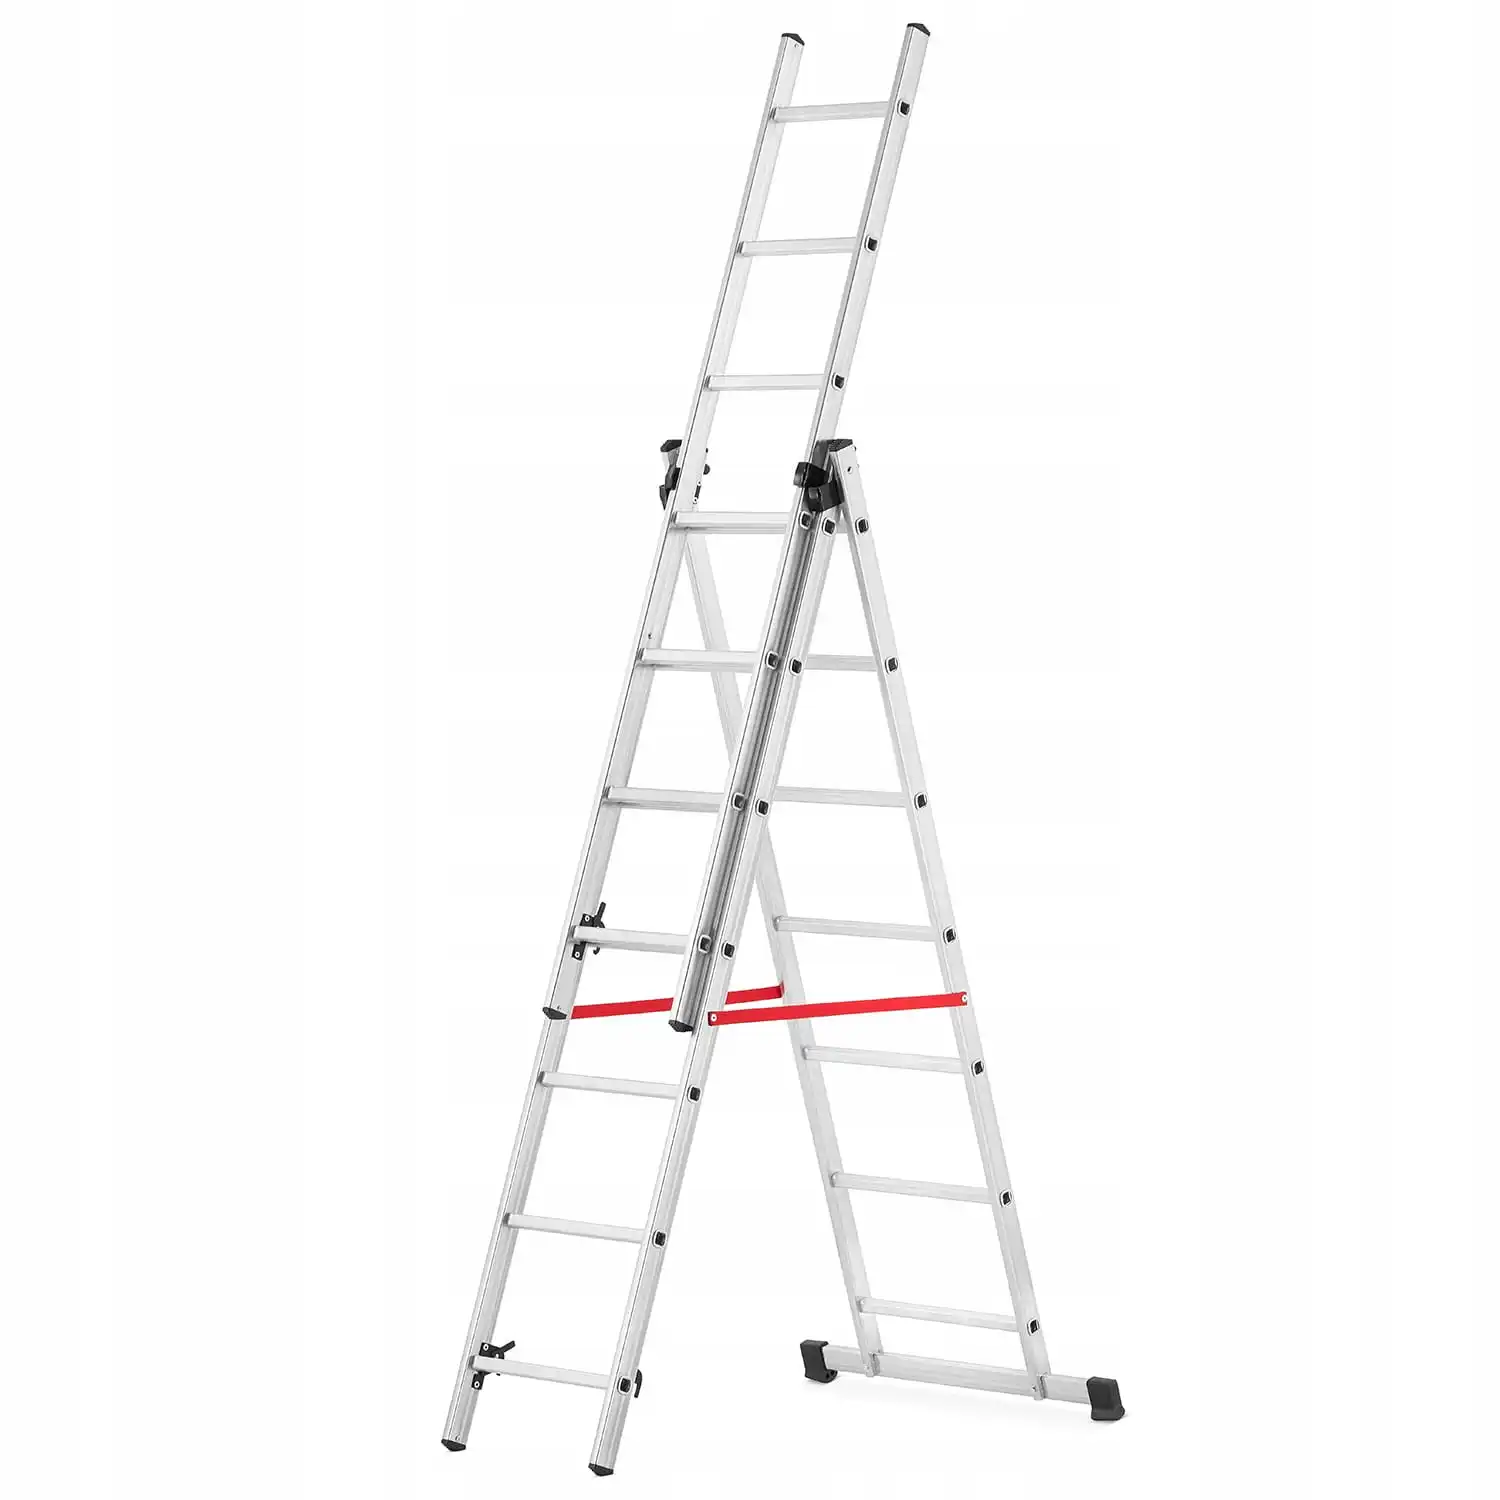 In Luxe Kustlijn Ladder 3 Section Aluminum 3x7 Higher | Aluminium Industrial Telescopic  Ladder | The Longest 150 Kg Higher Monika - Buy Lader Ladder Telescopic  Extension Ladders 3 Section,3x7 3-7 3*7 3 Section 7